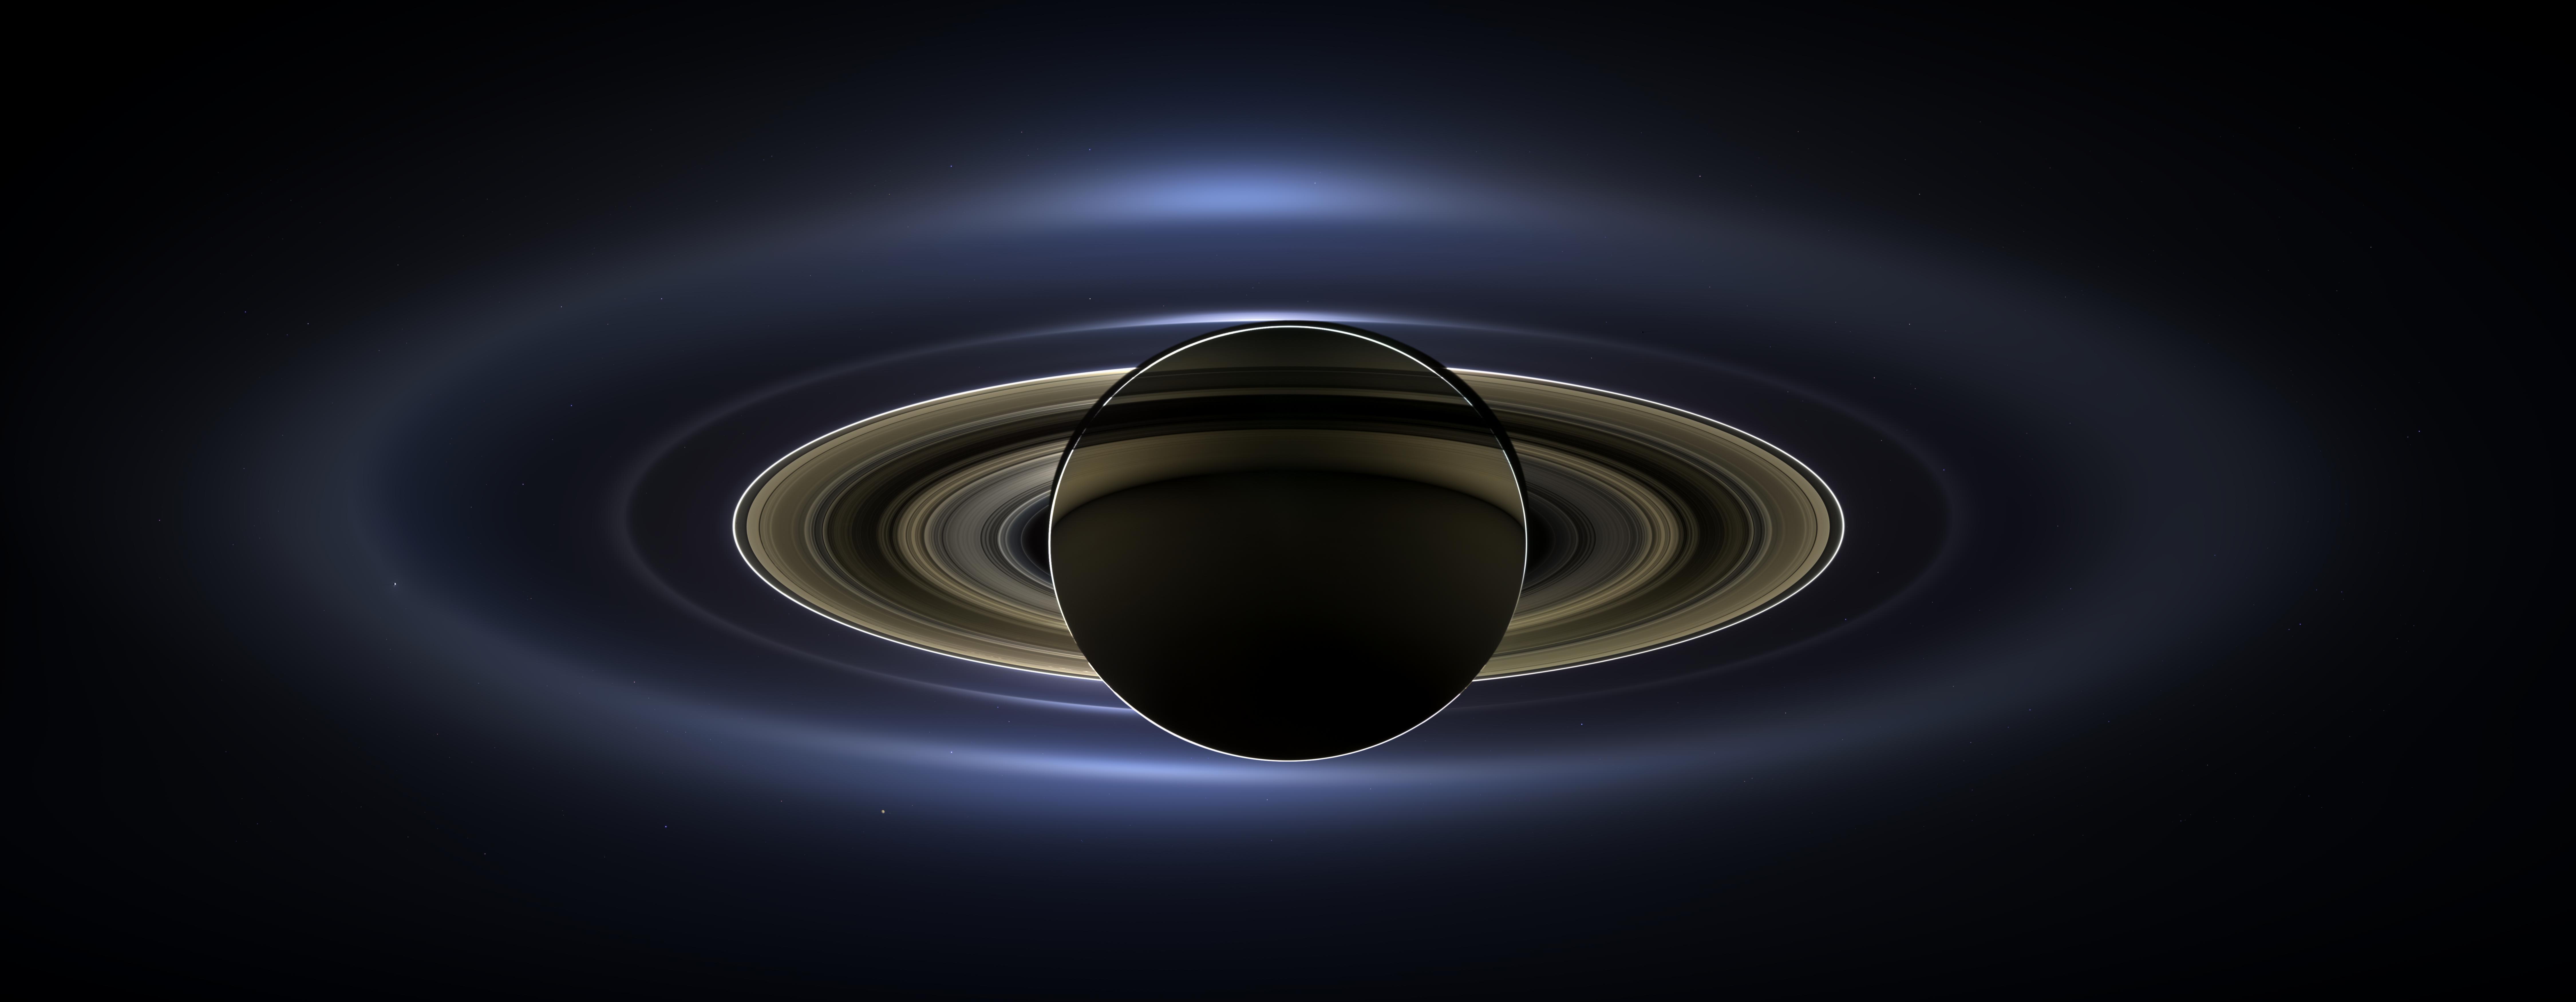 NASA Cassini затмевает кольца Сатурна